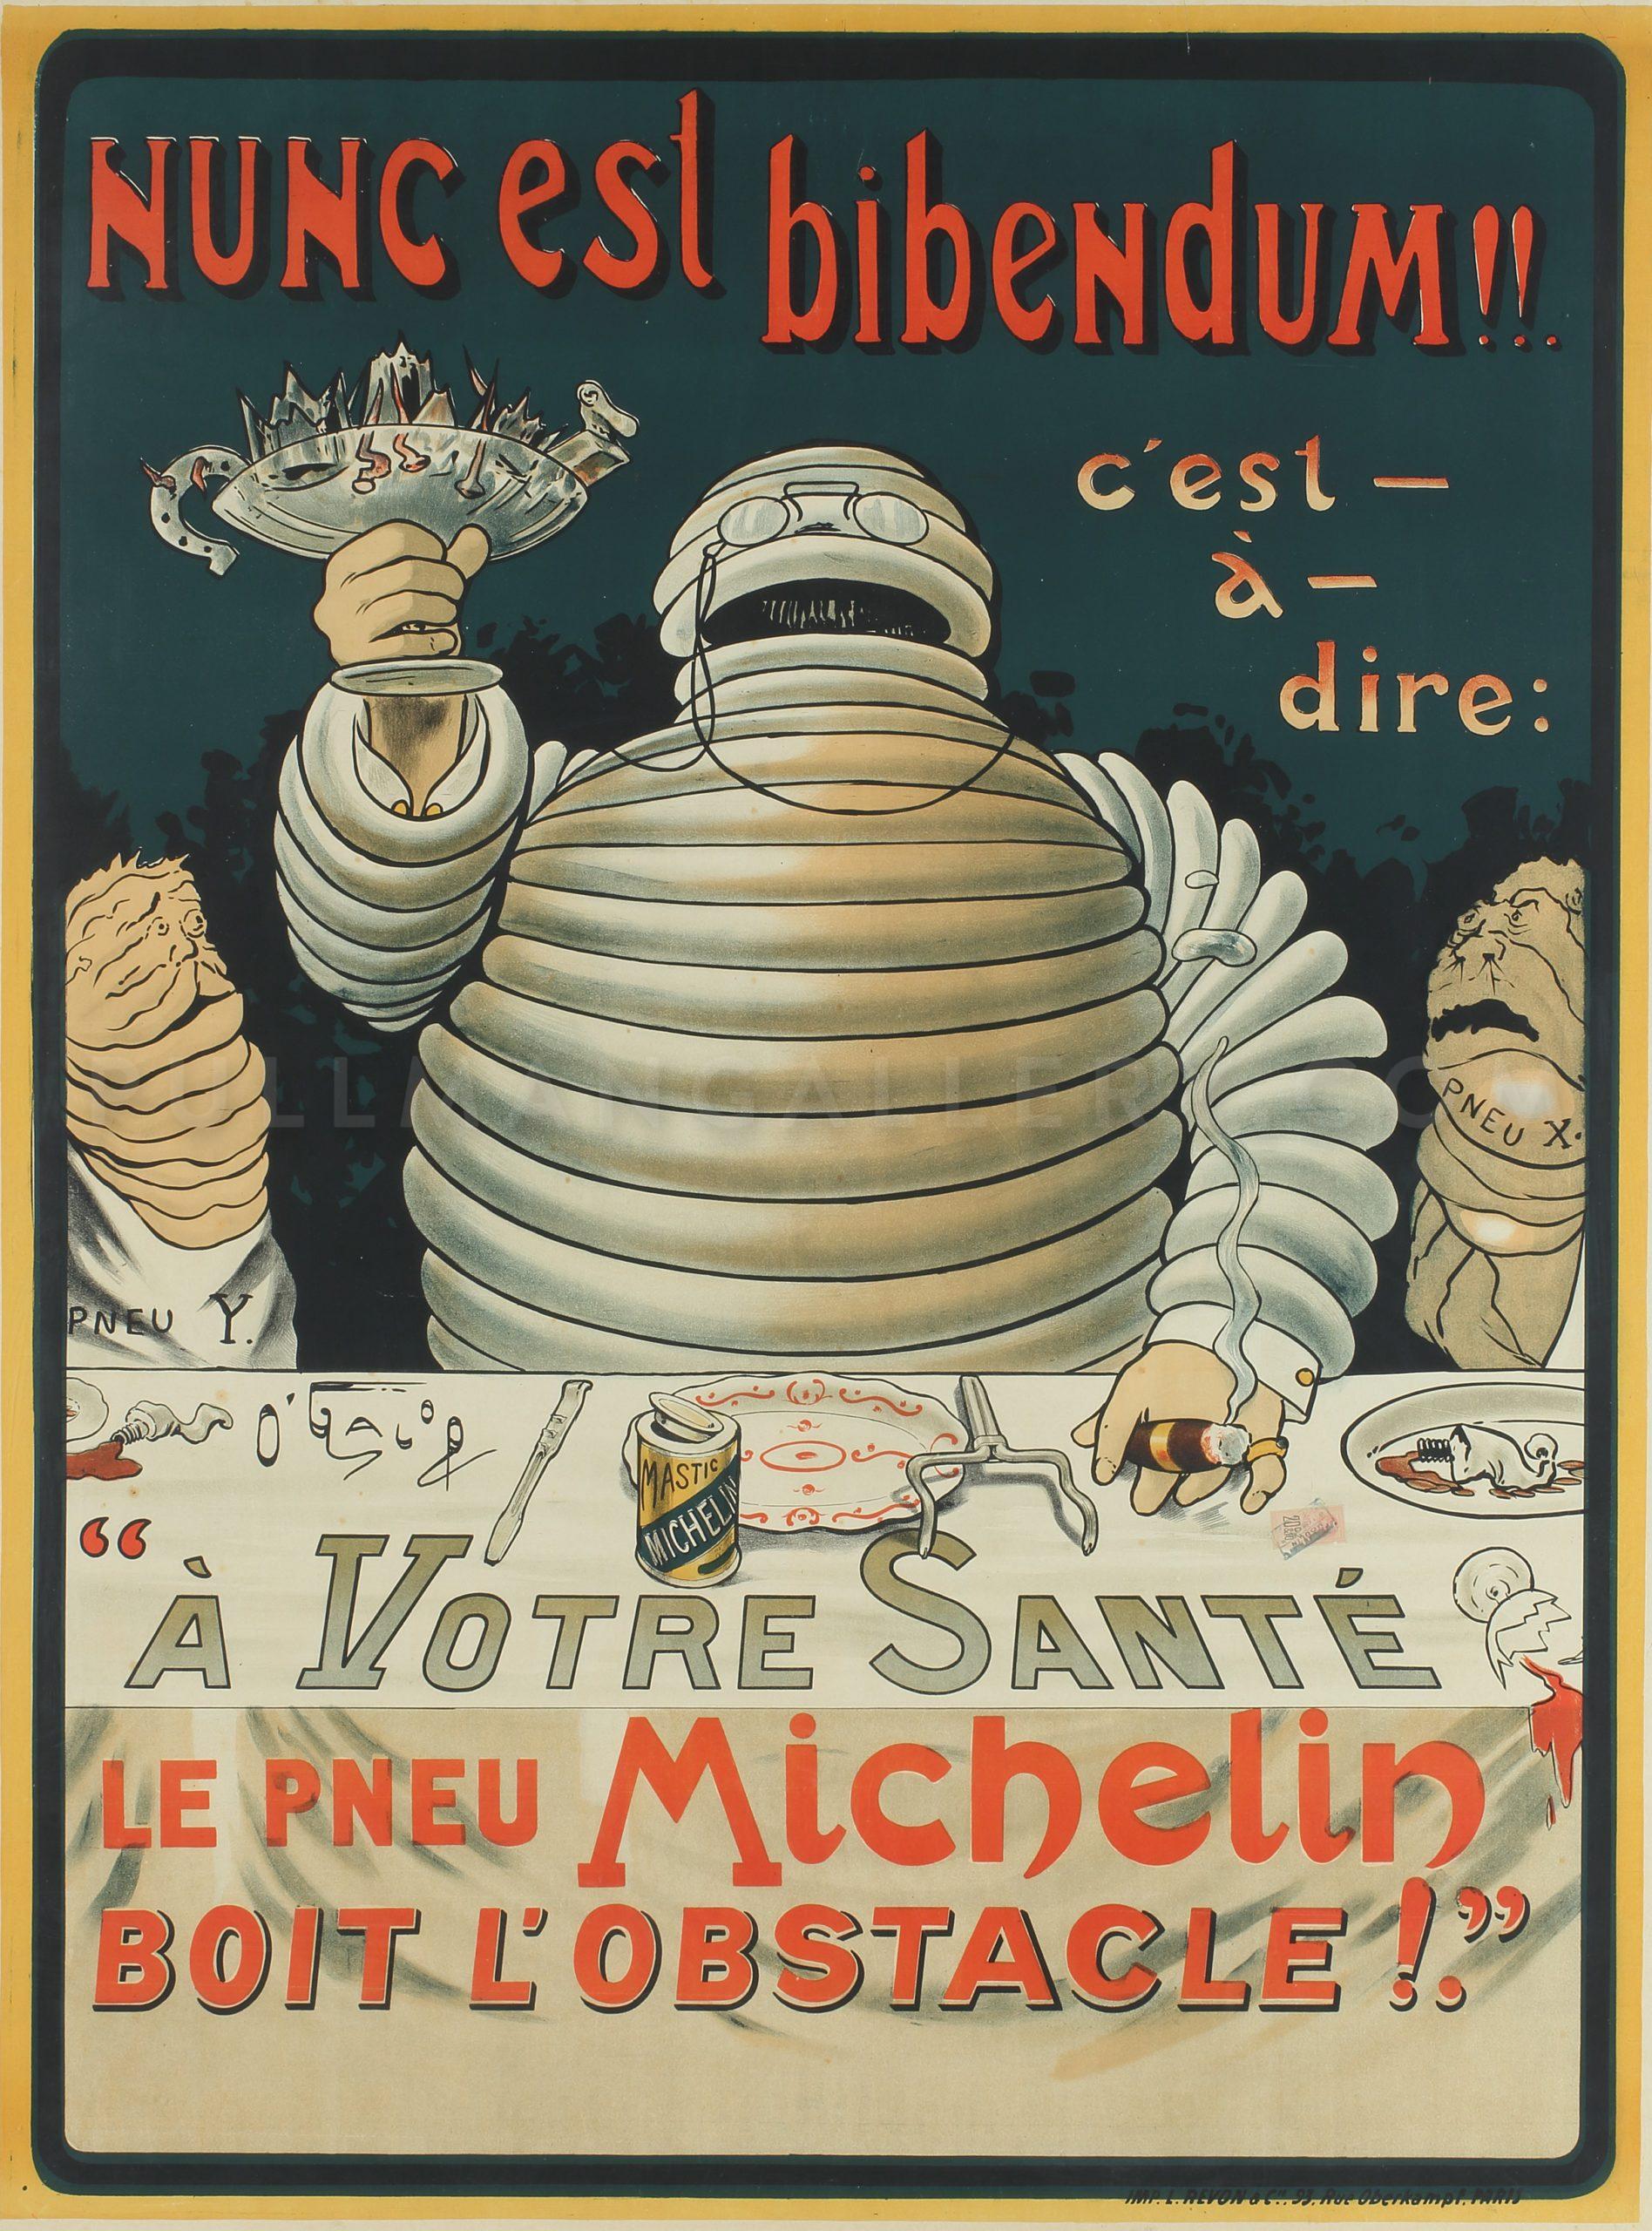 Le Pneu Michelin – Nunc est Bibendum!!', 1898 – Pullman Gallery